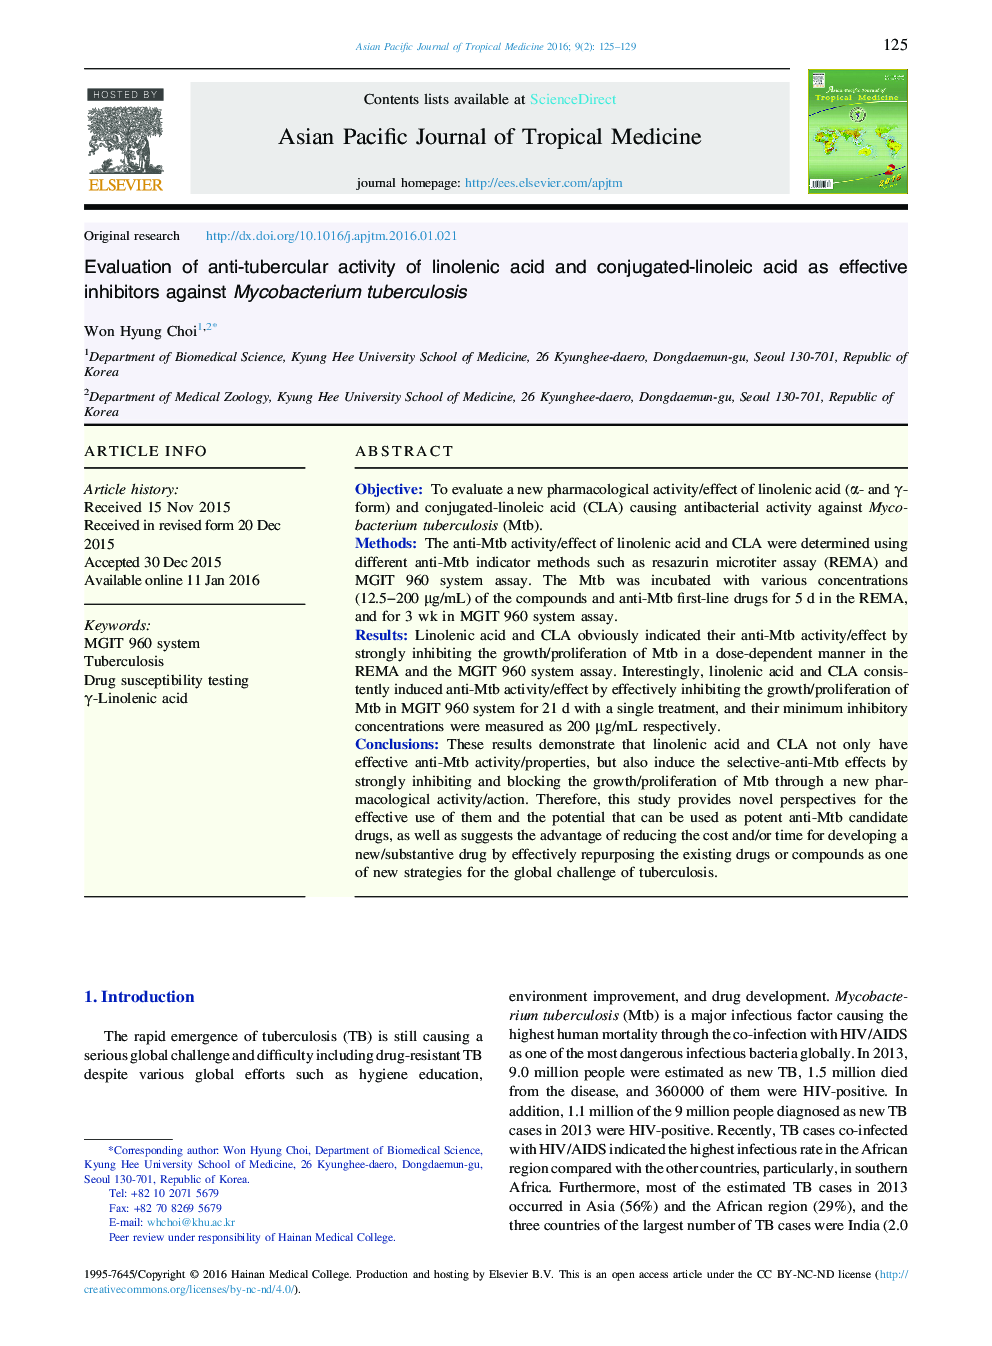 Evaluation of anti-tubercular activity of linolenic acid and conjugated-linoleic acid as effective inhibitors against Mycobacterium tuberculosis 